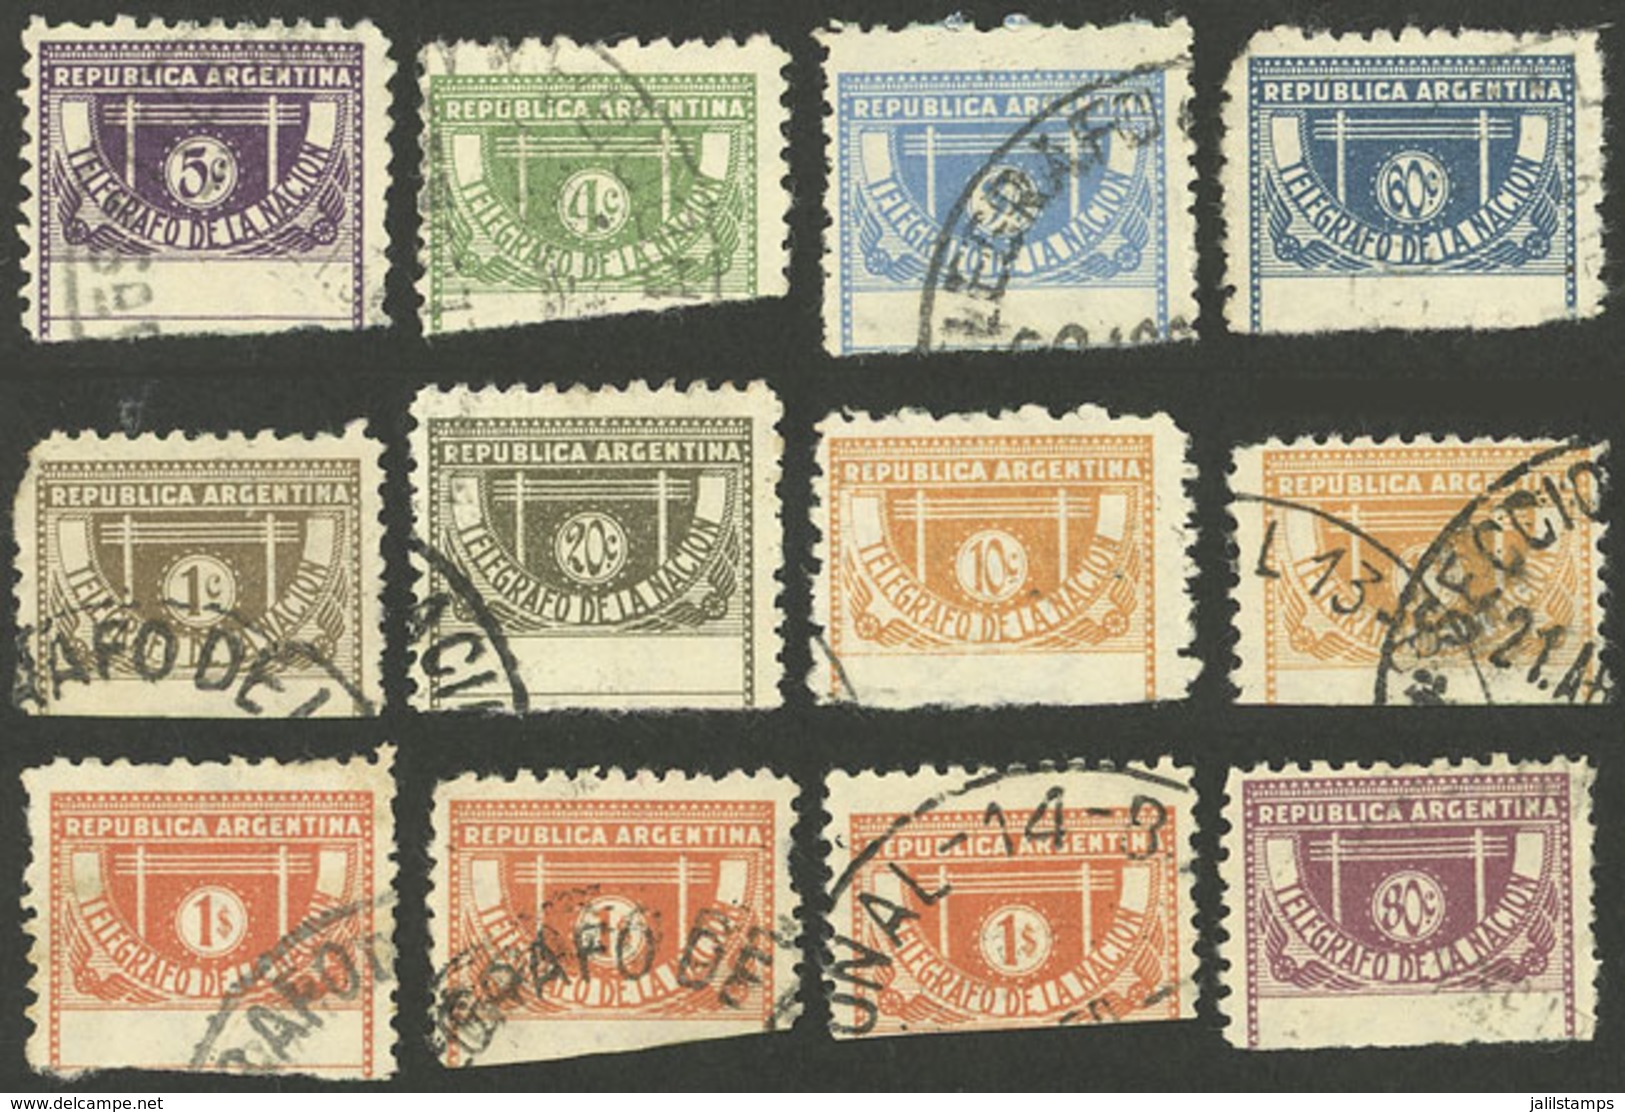 ARGENTINA: 10 Used Stamps Of Telégrafo De La Nación, Different Values, VF Quality - Télégraphes